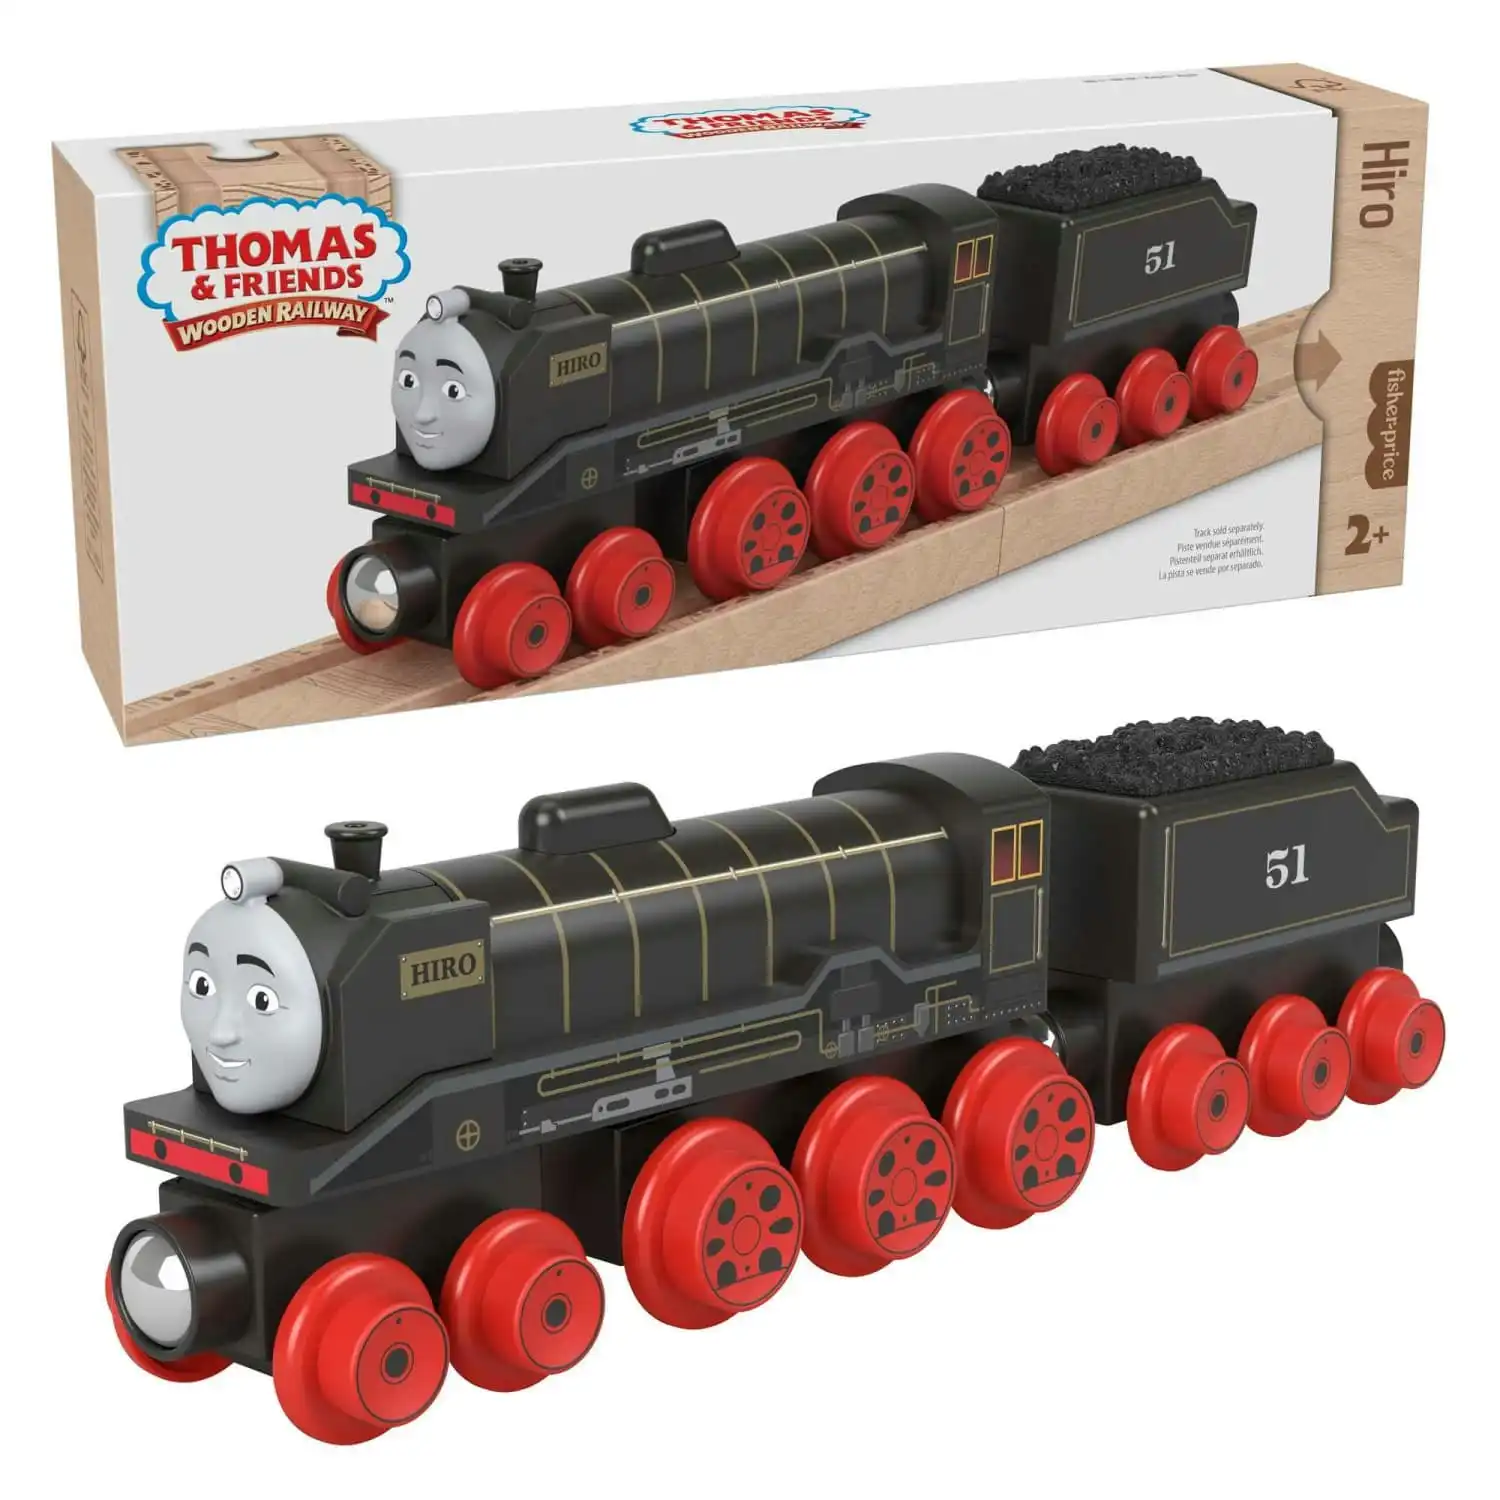 Thomas & Friends Wooden Railway Hiro Train Engine And Coal Car